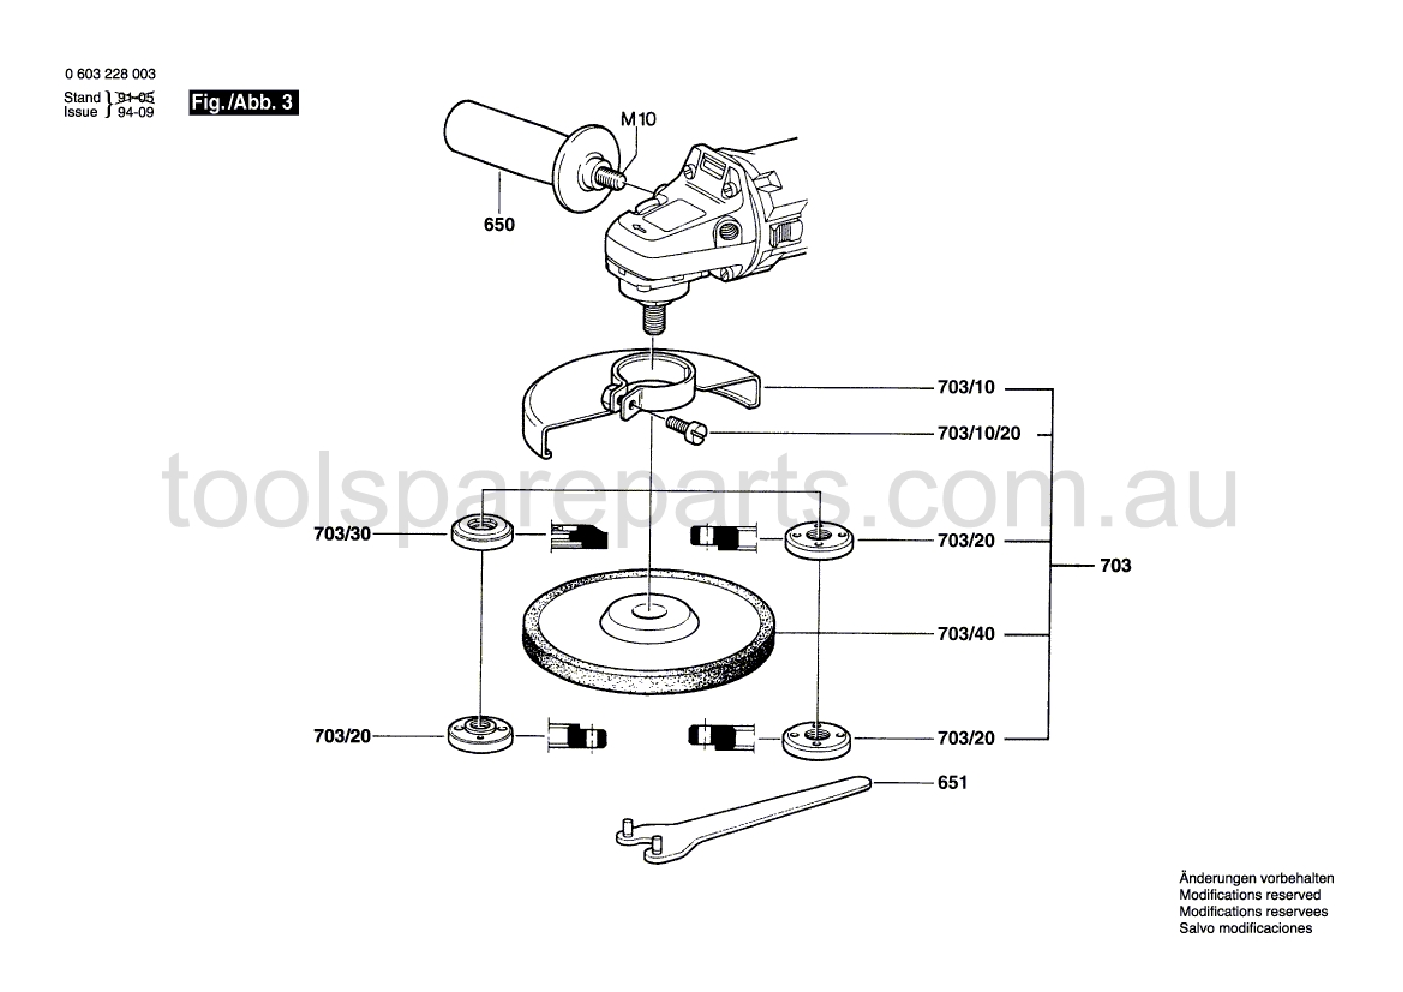 Bosch PSF 22 0603228037  Diagram 3